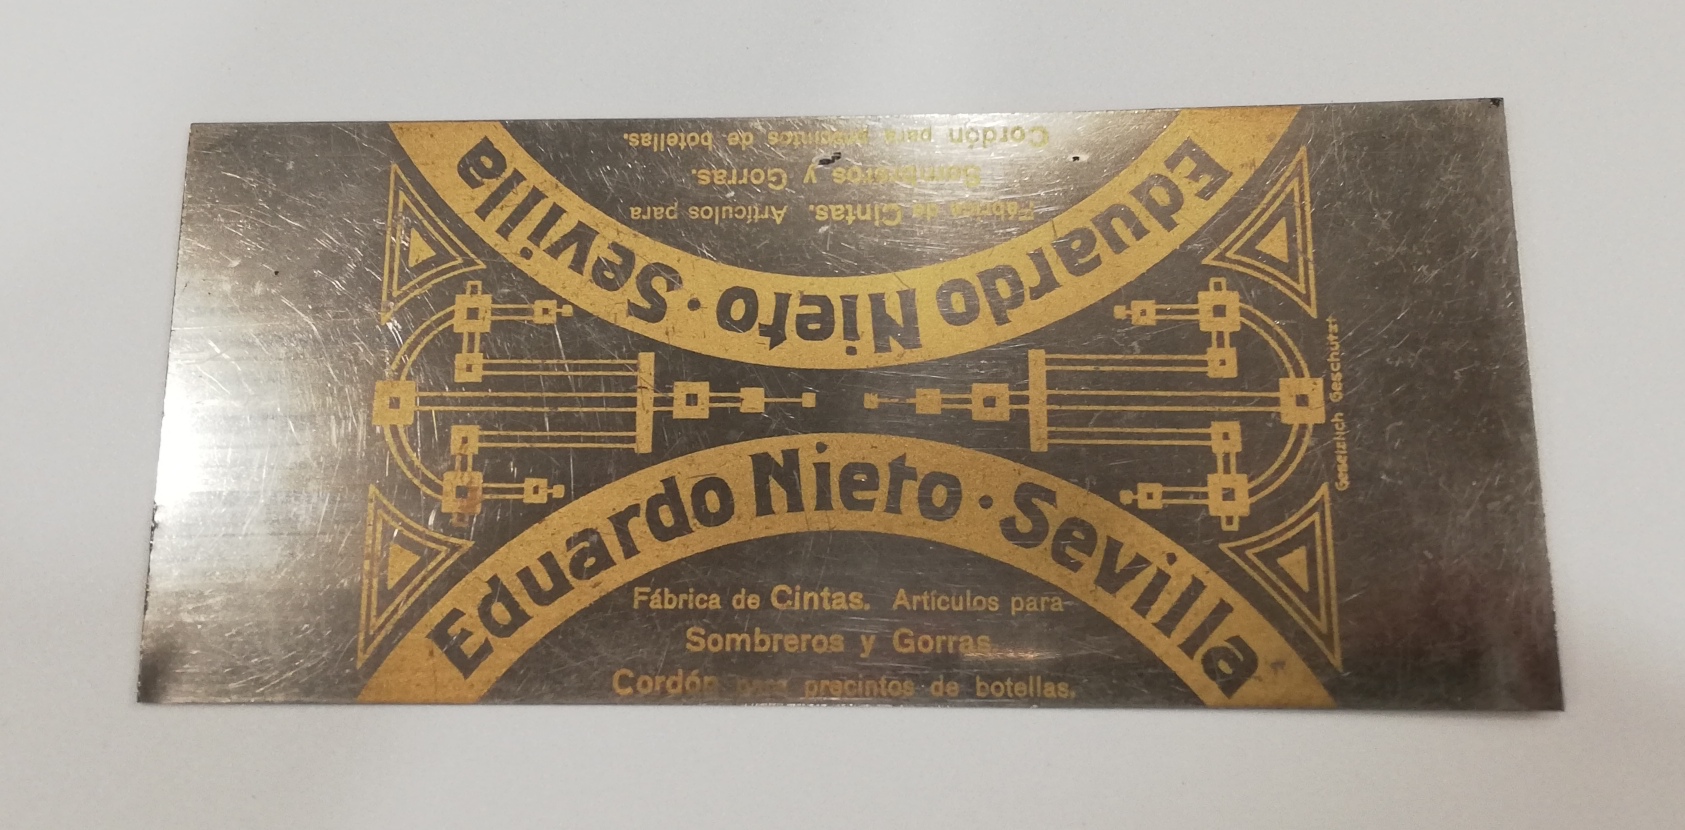 Placa publicitaria de Eduardo Nieto, Sevilla. Fábrica de cintas. Principios siglo XX. Interesante